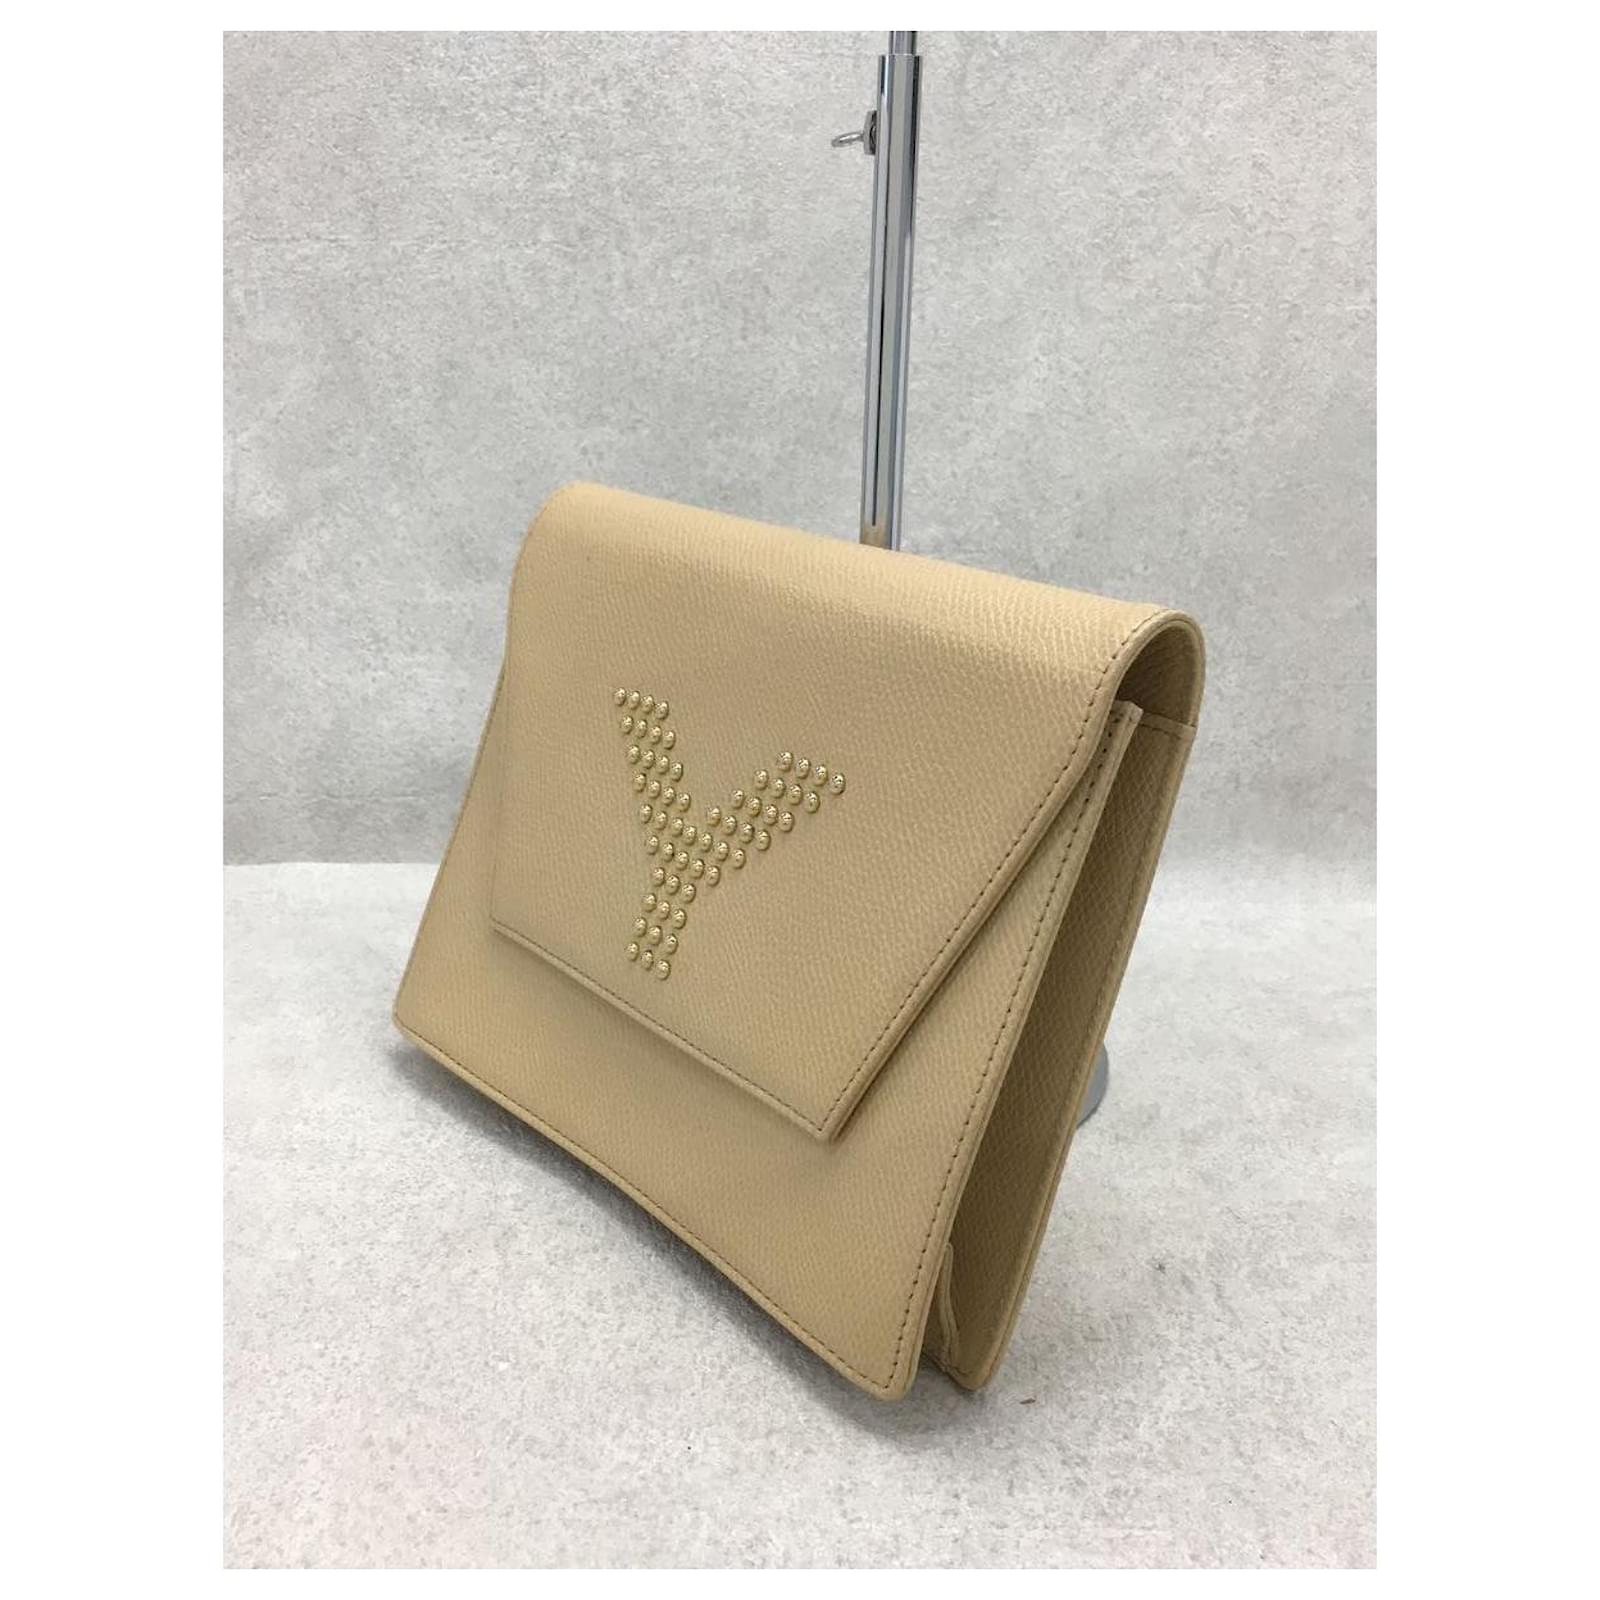 Used] YVES SAINT LAURENT ◇ Clutch bag / Y studs / leather / beige